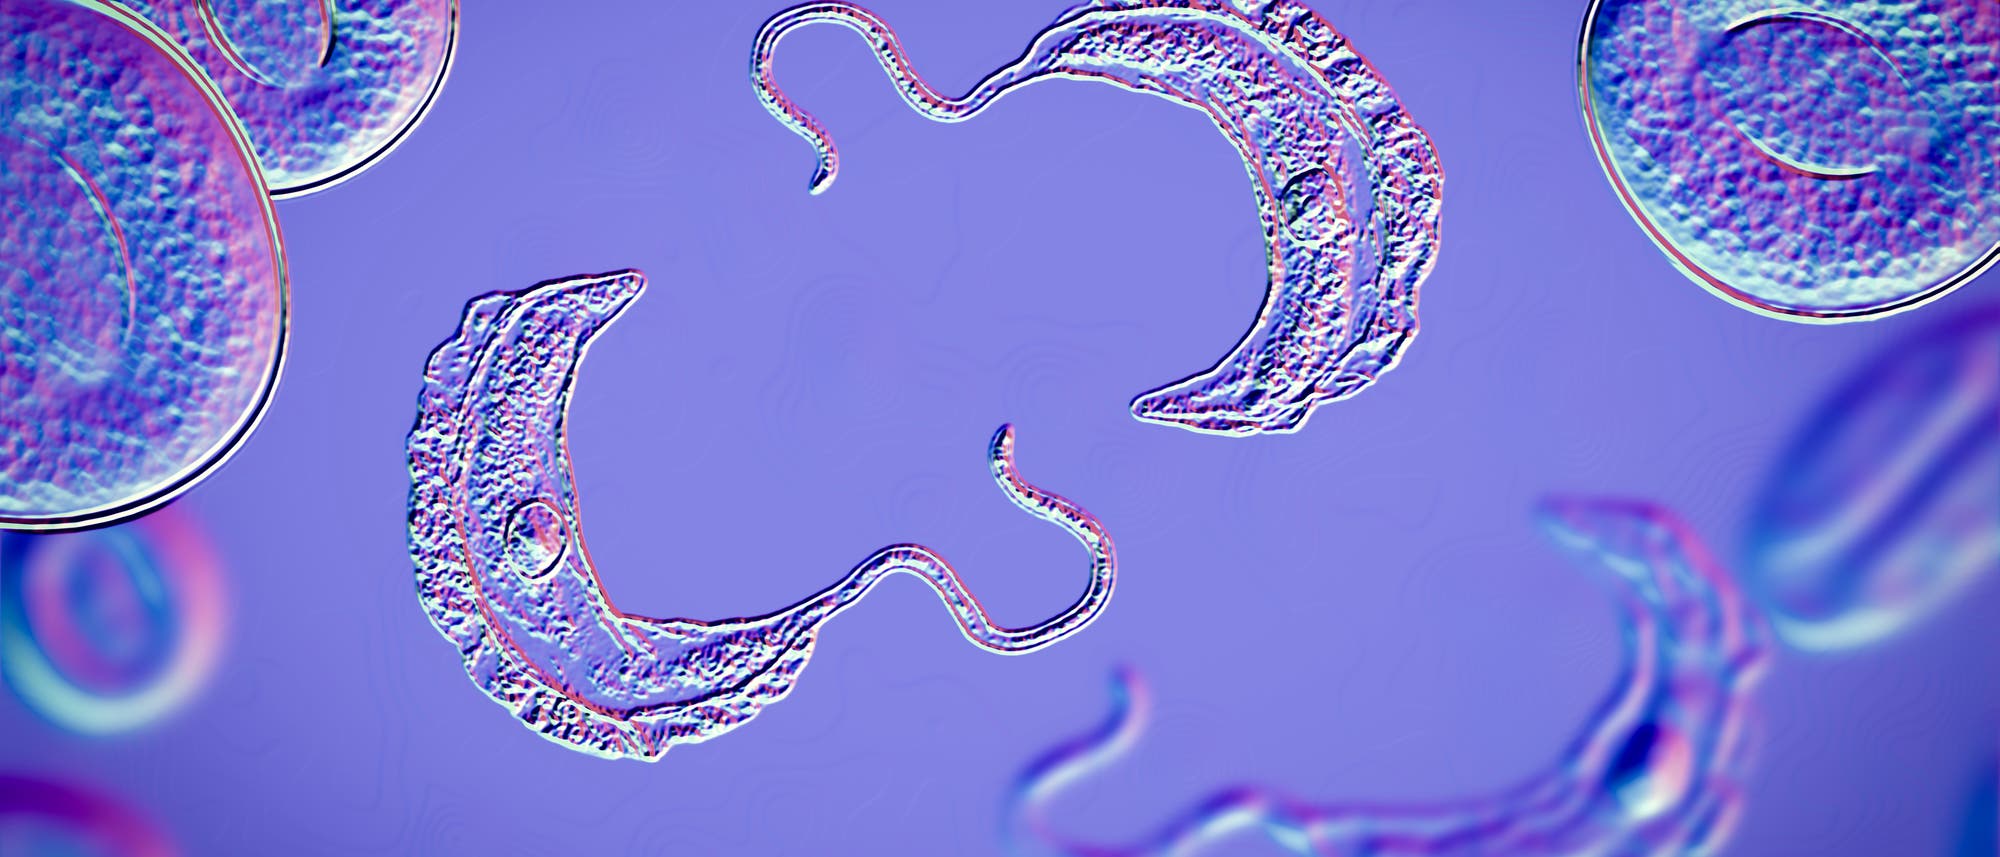 Trypanosoma brucei-Parasiten unter dem Mikroskop